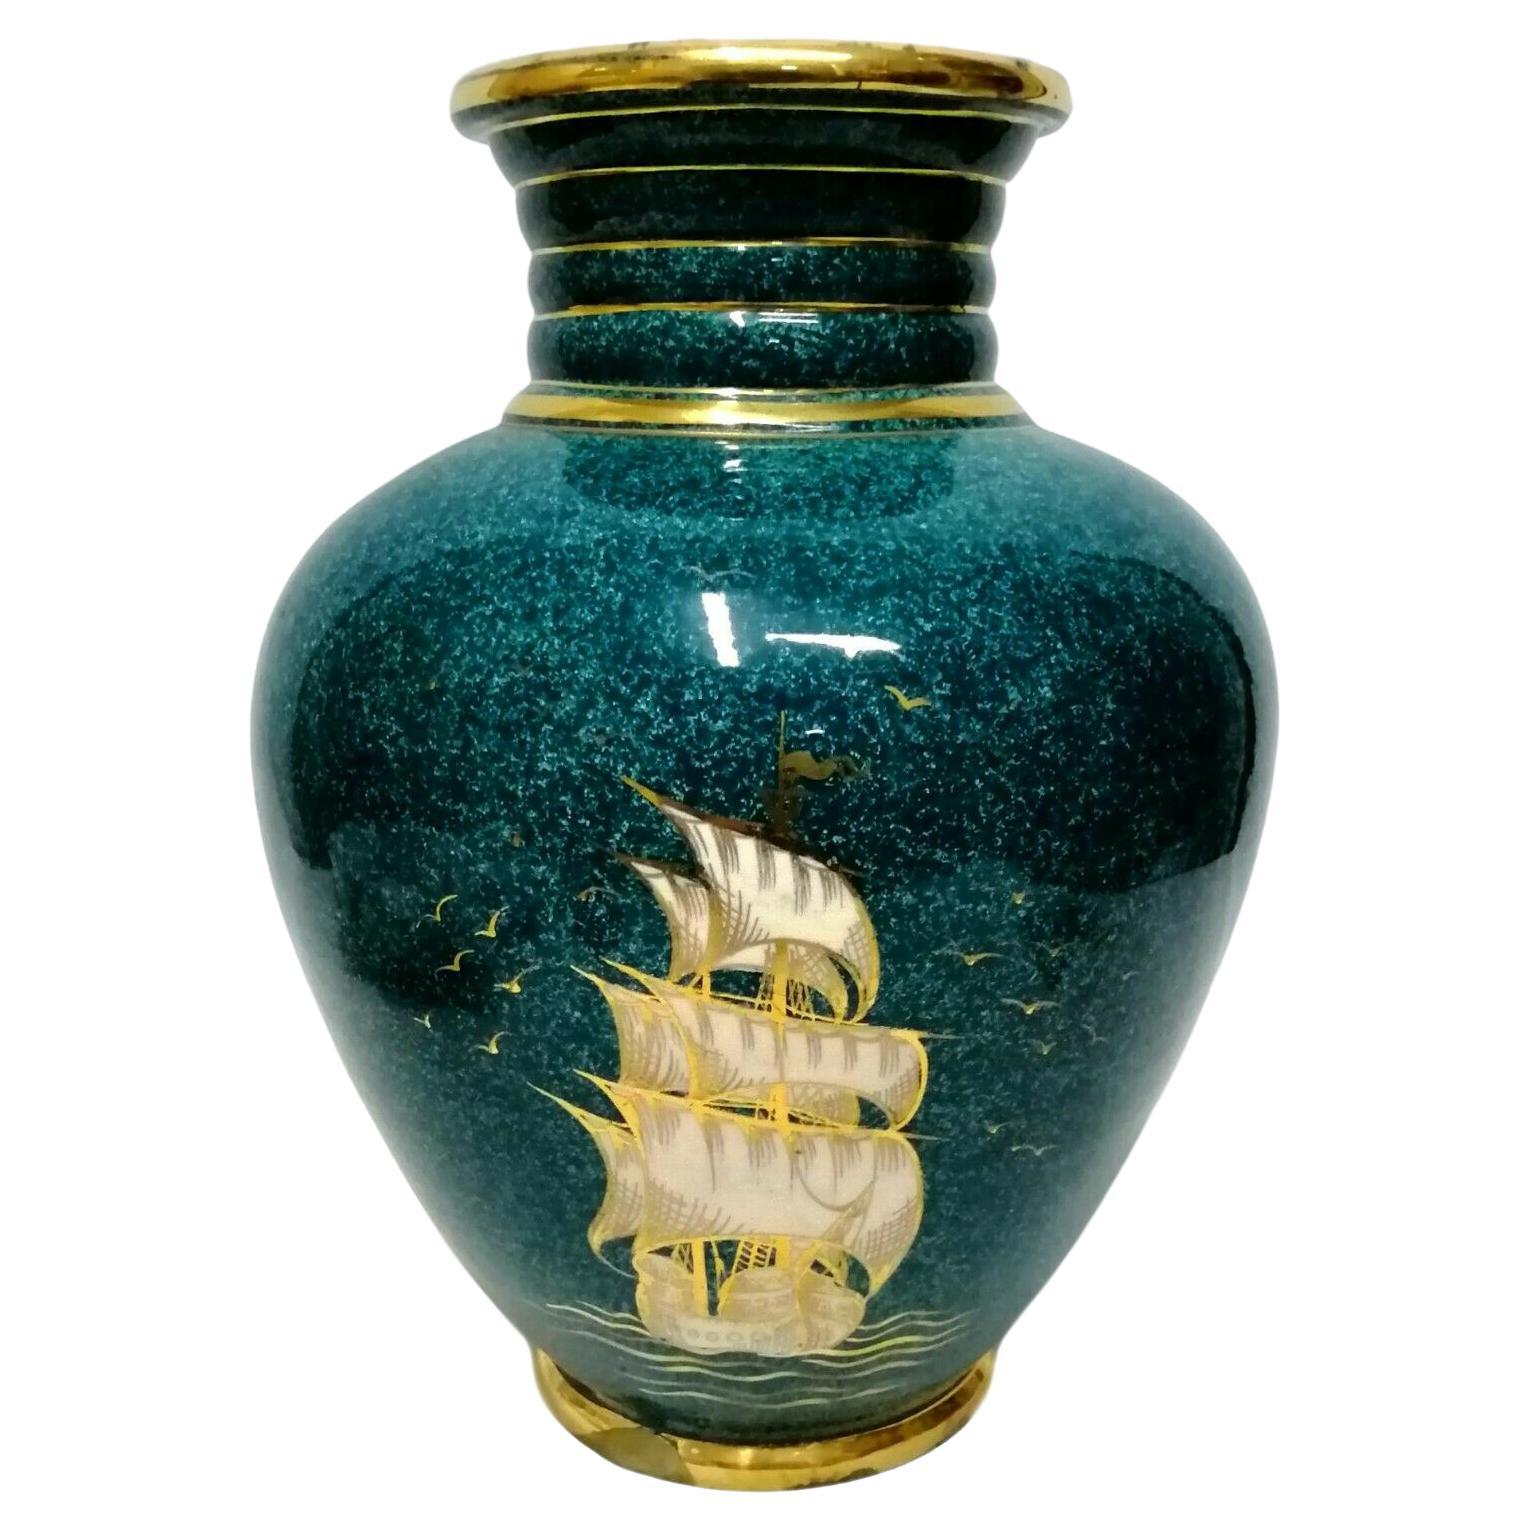 Ceramic Vase Produced by Barraud, Messeri & C., 1940s